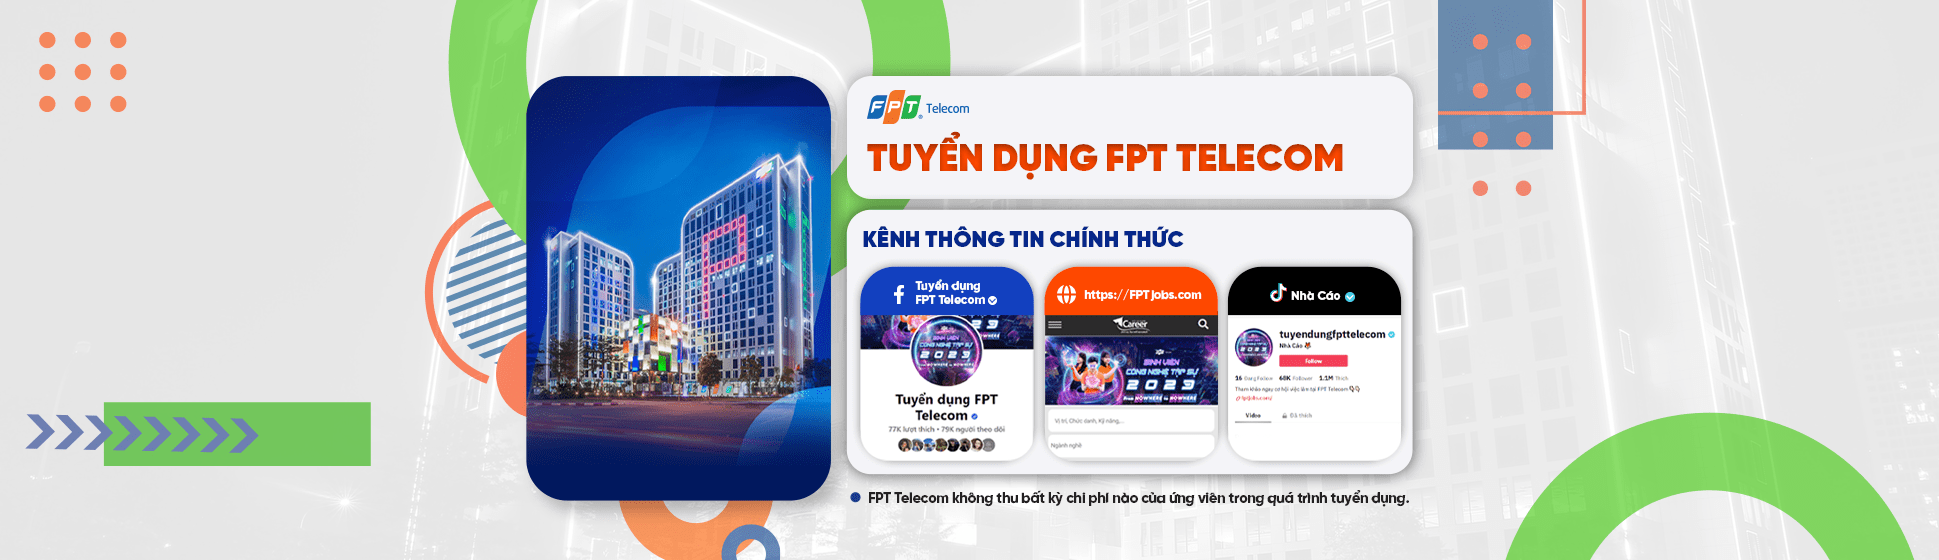 Tuyển dụng FPT Telecom